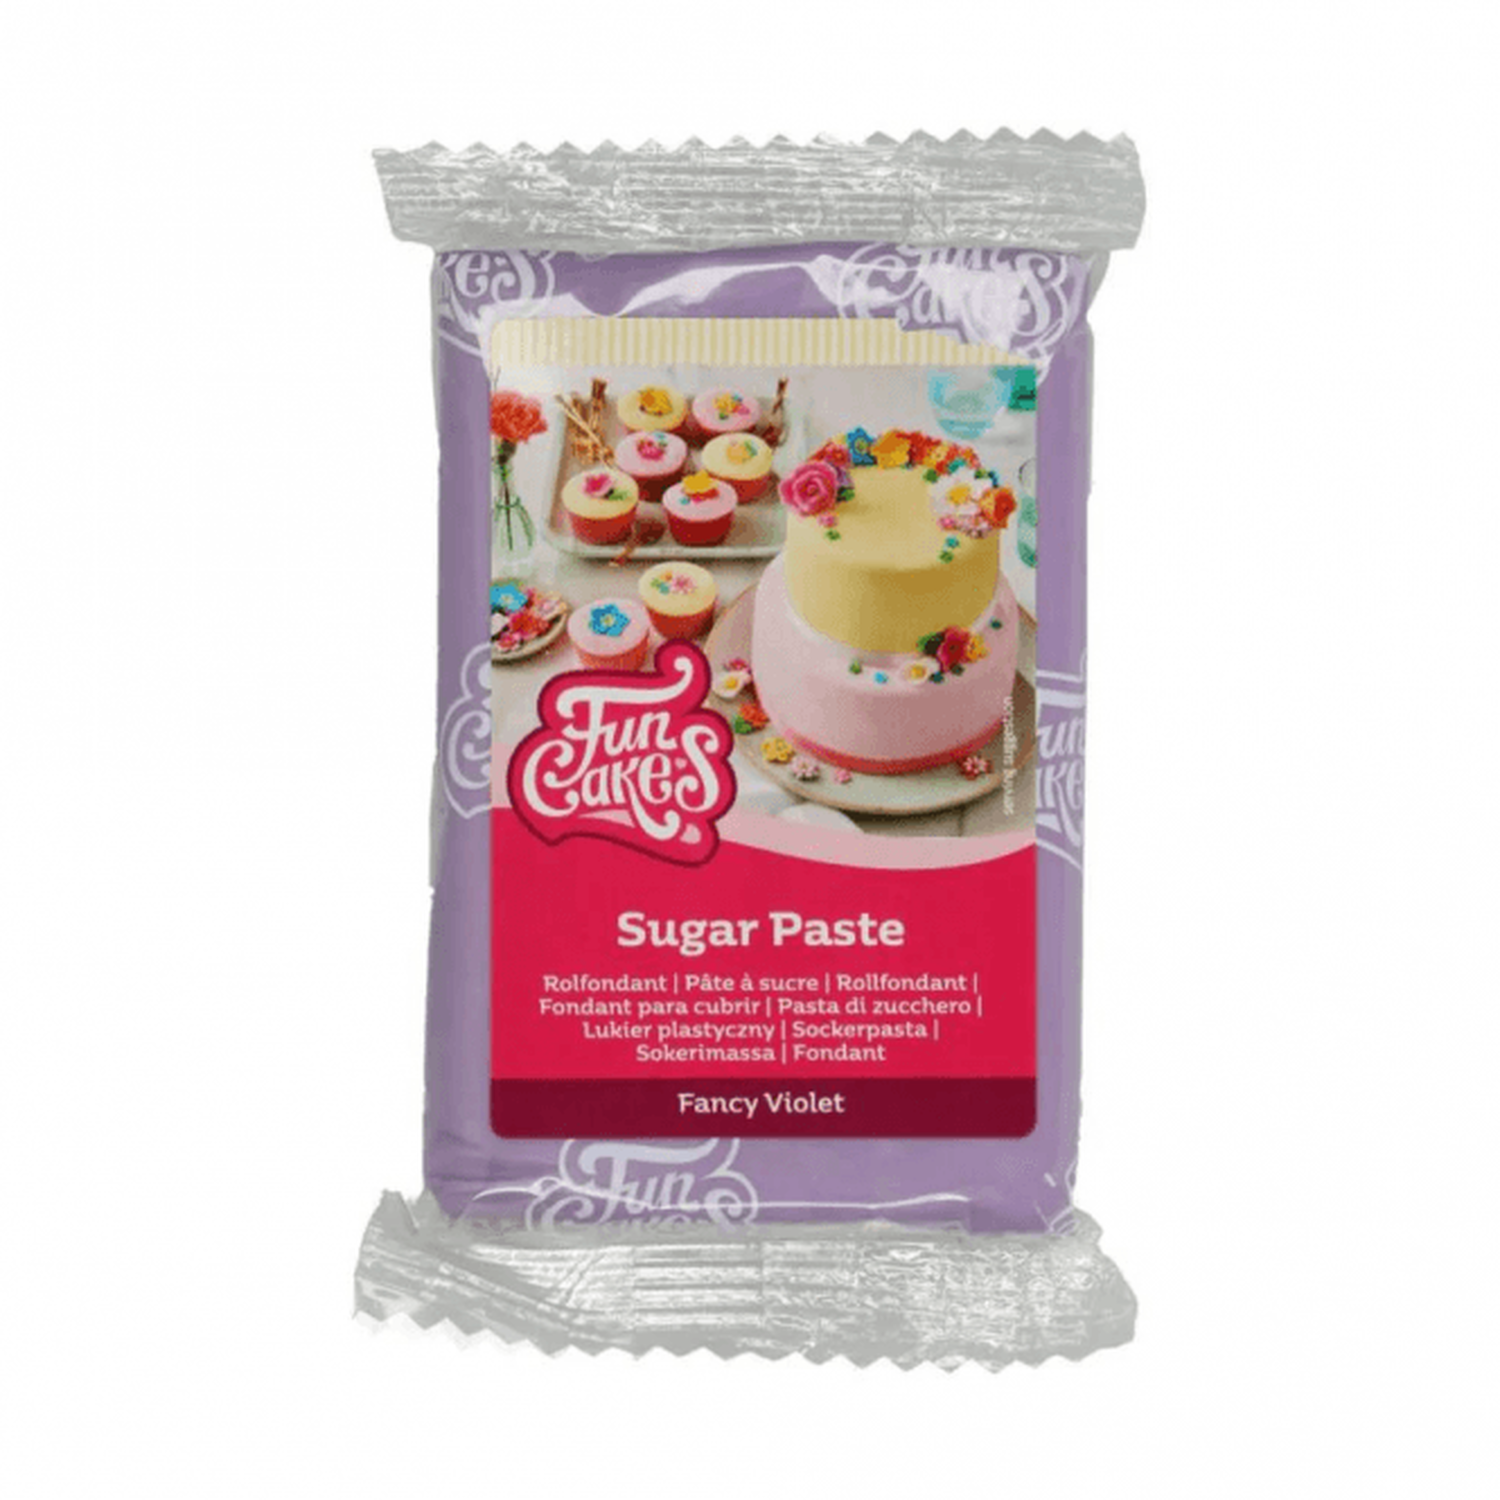 Funcakes Sugar Paste - Fancy Violet Image